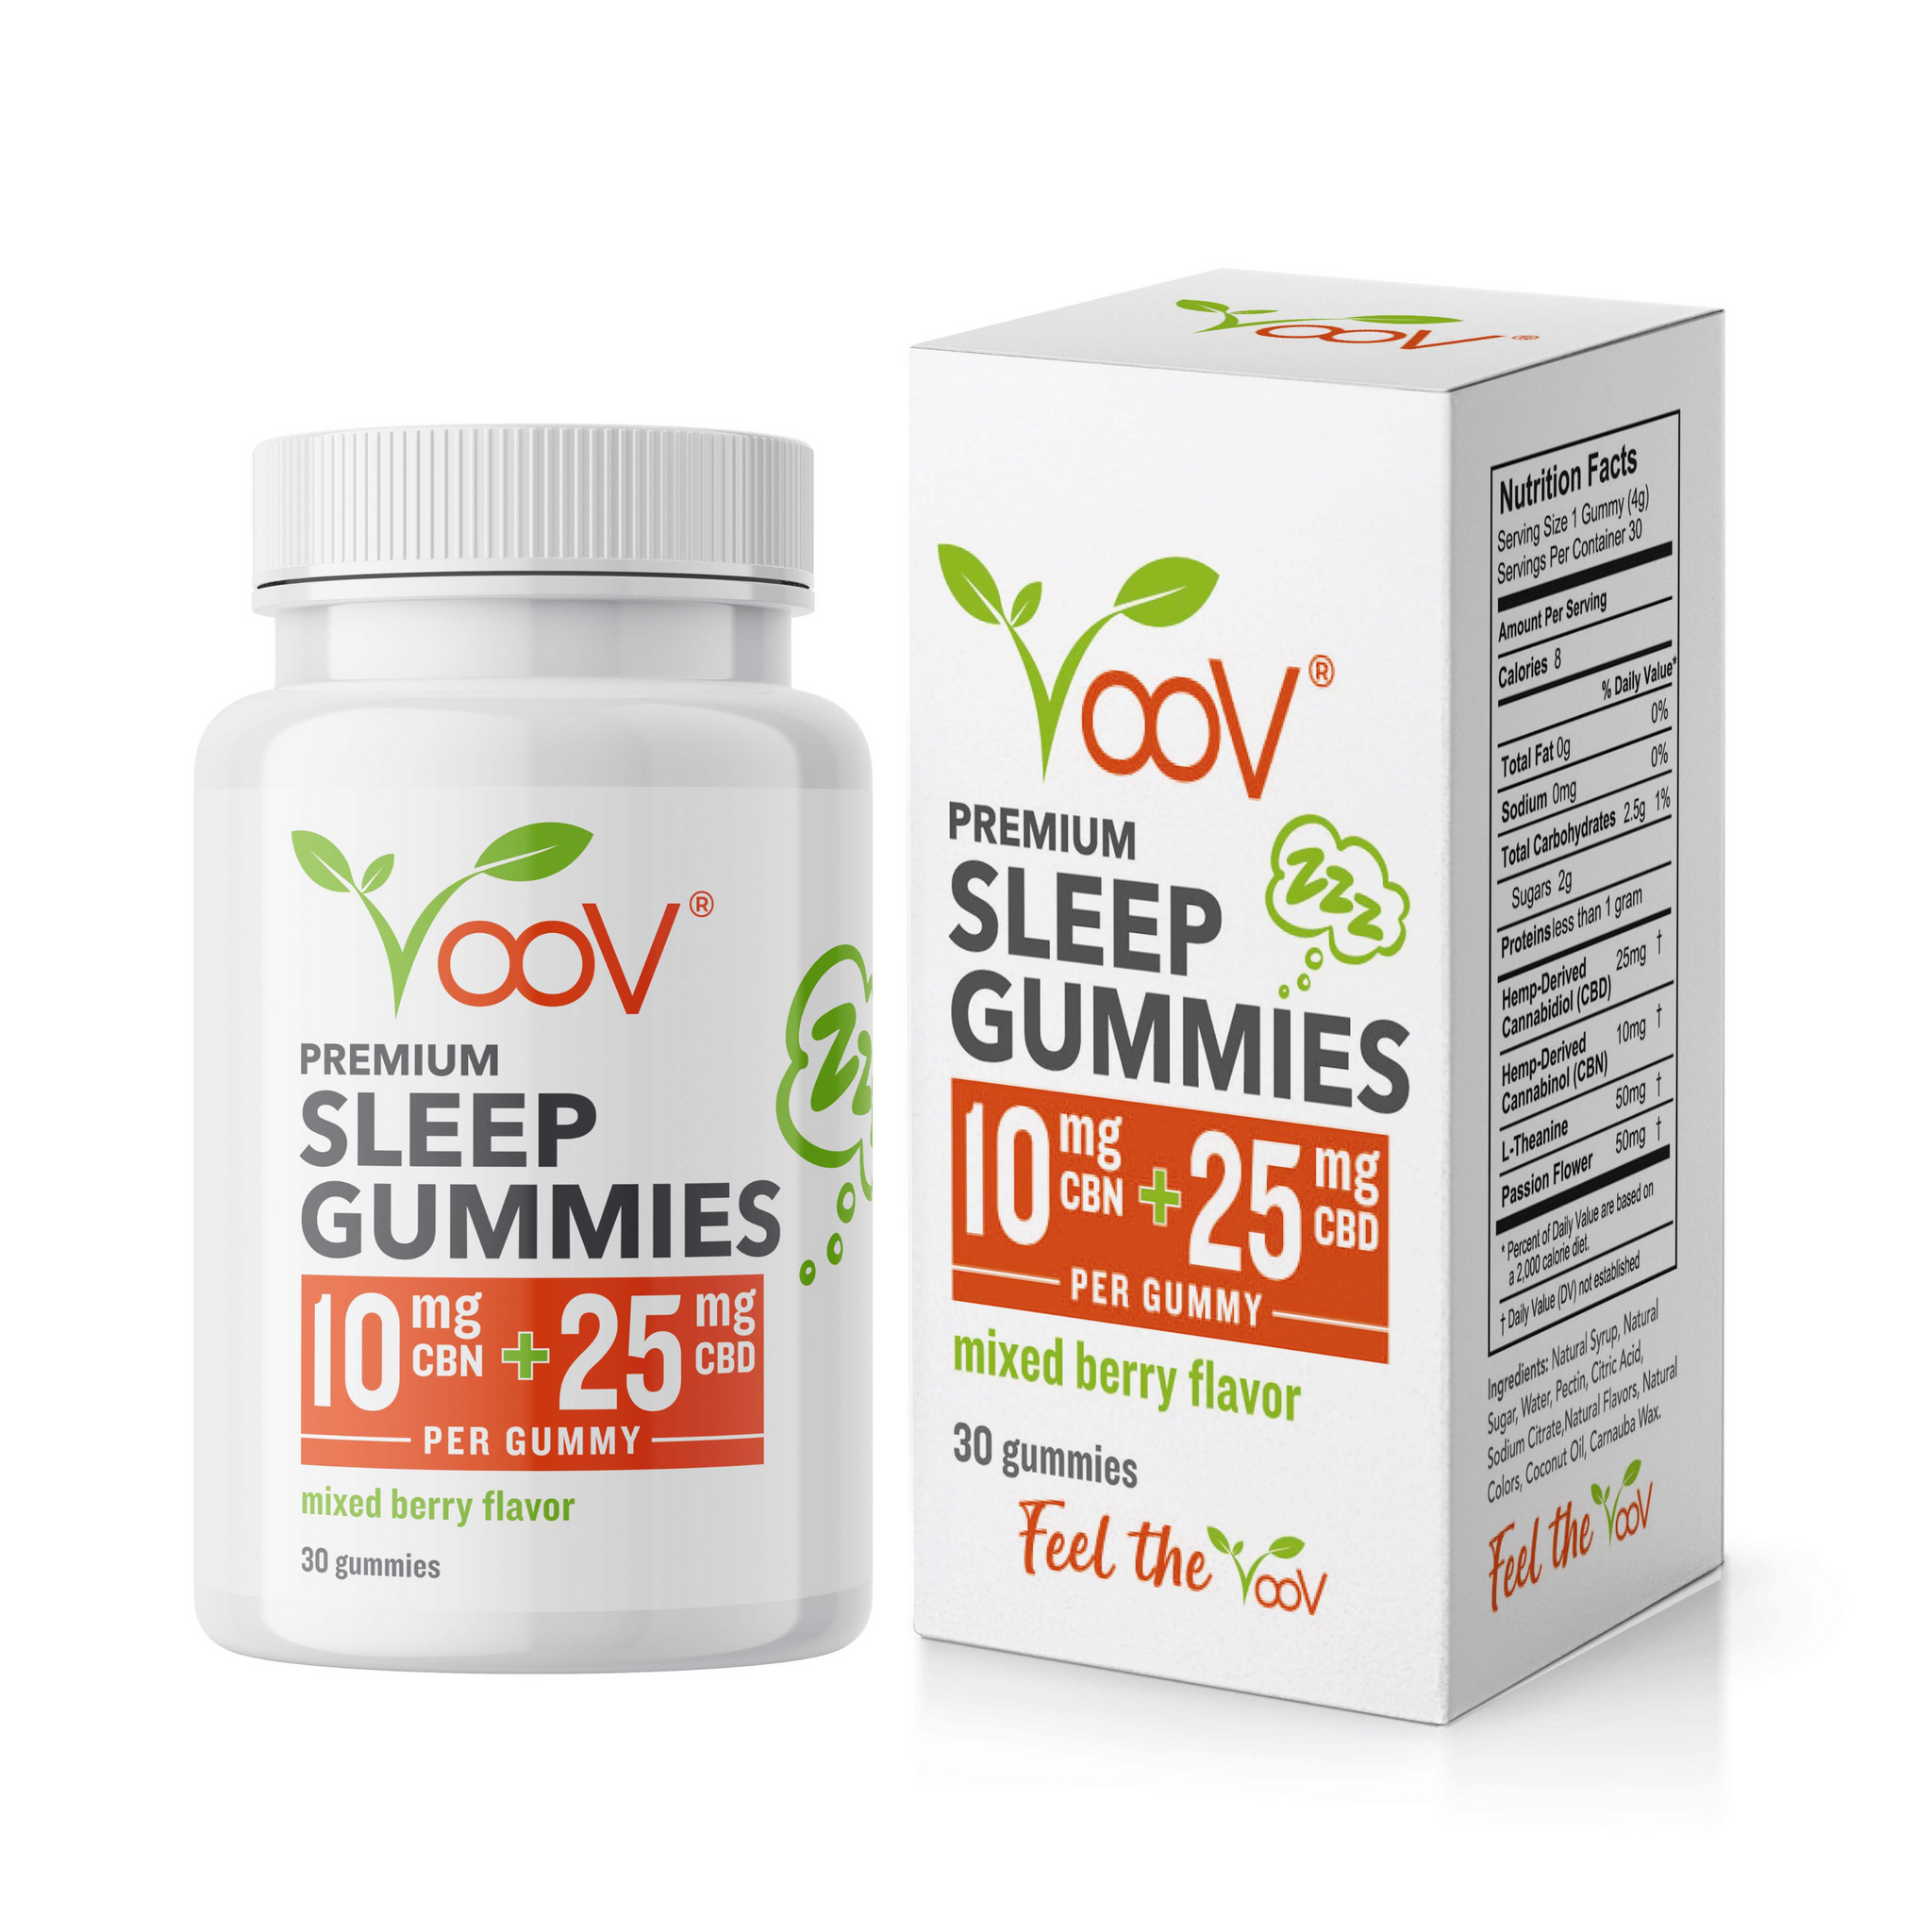 Voov Premium Sleep Gummies Mixed Berry Flavor 10mg CBN and 25mg CBD